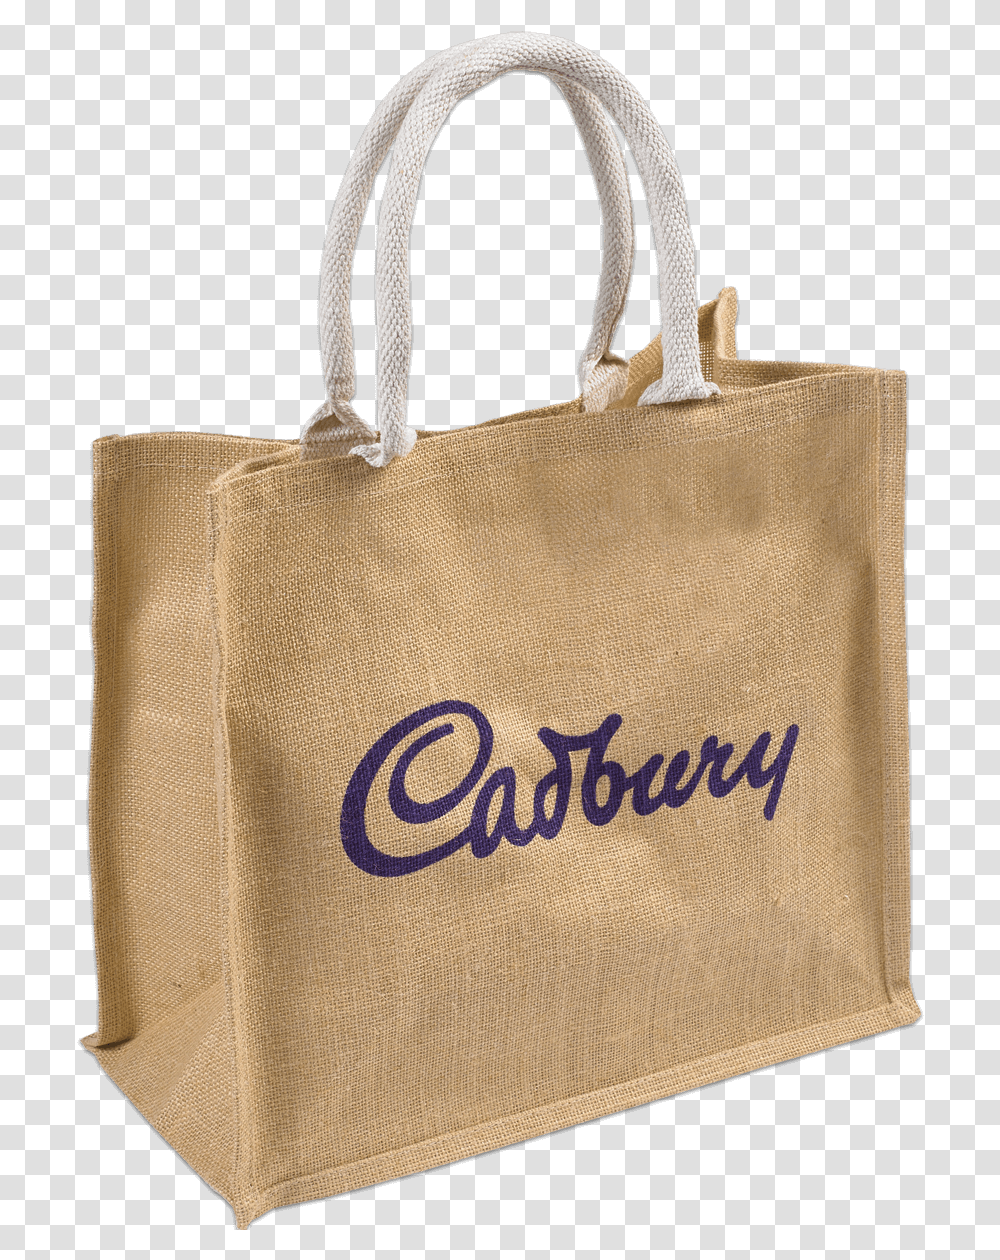 Gift Bag Bags Of Cadburys, Handbag, Accessories, Accessory, Tote Bag Transparent Png